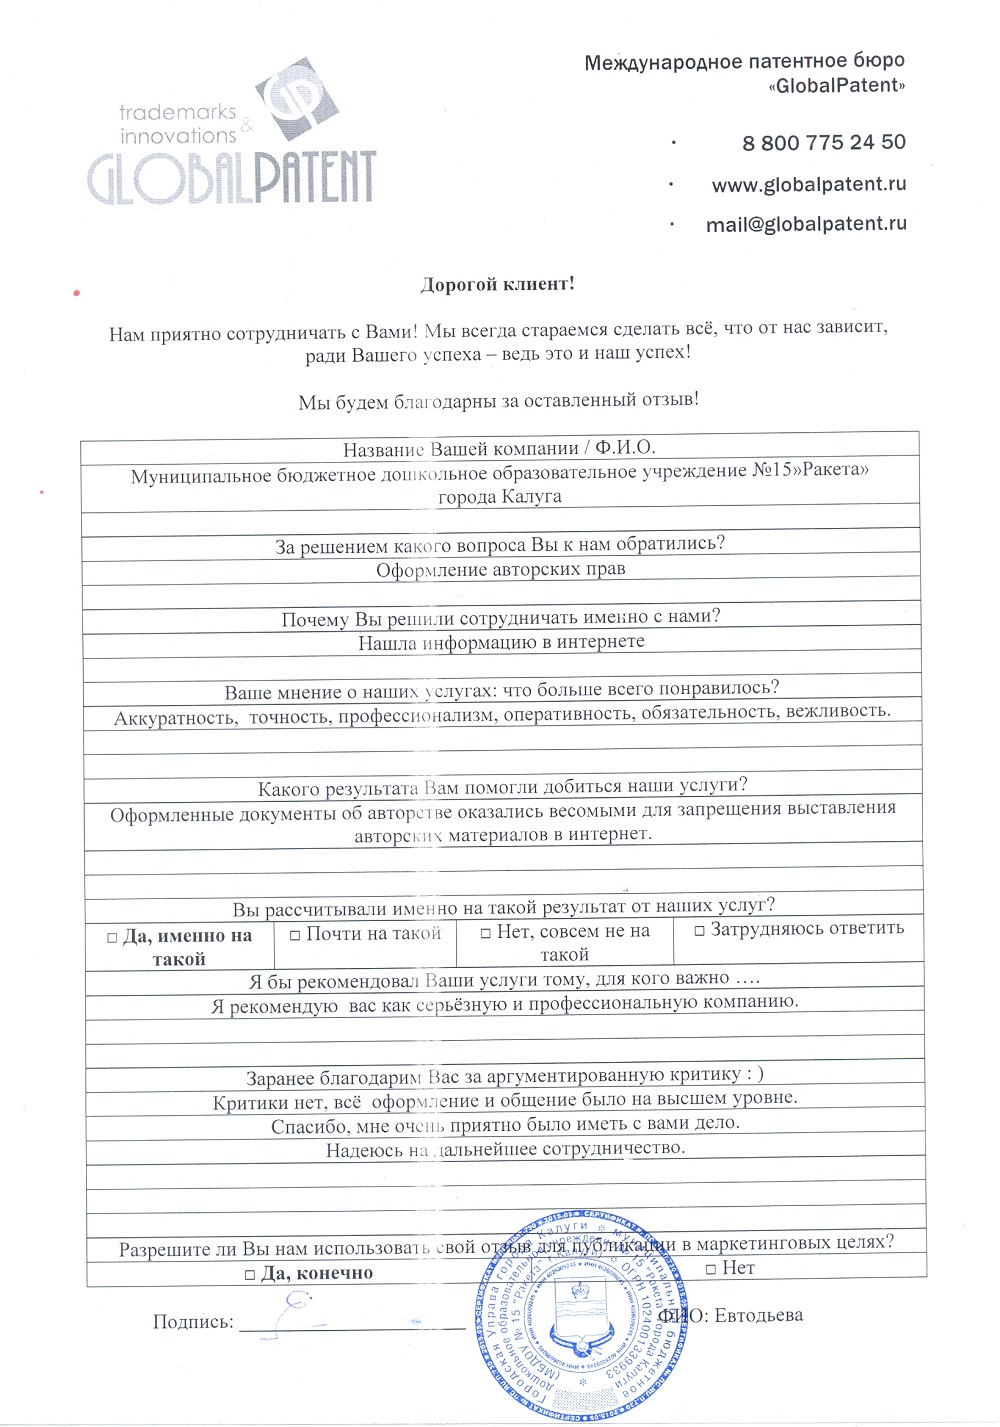 Отзыв Евтодьева Калуга патентное бюро рф